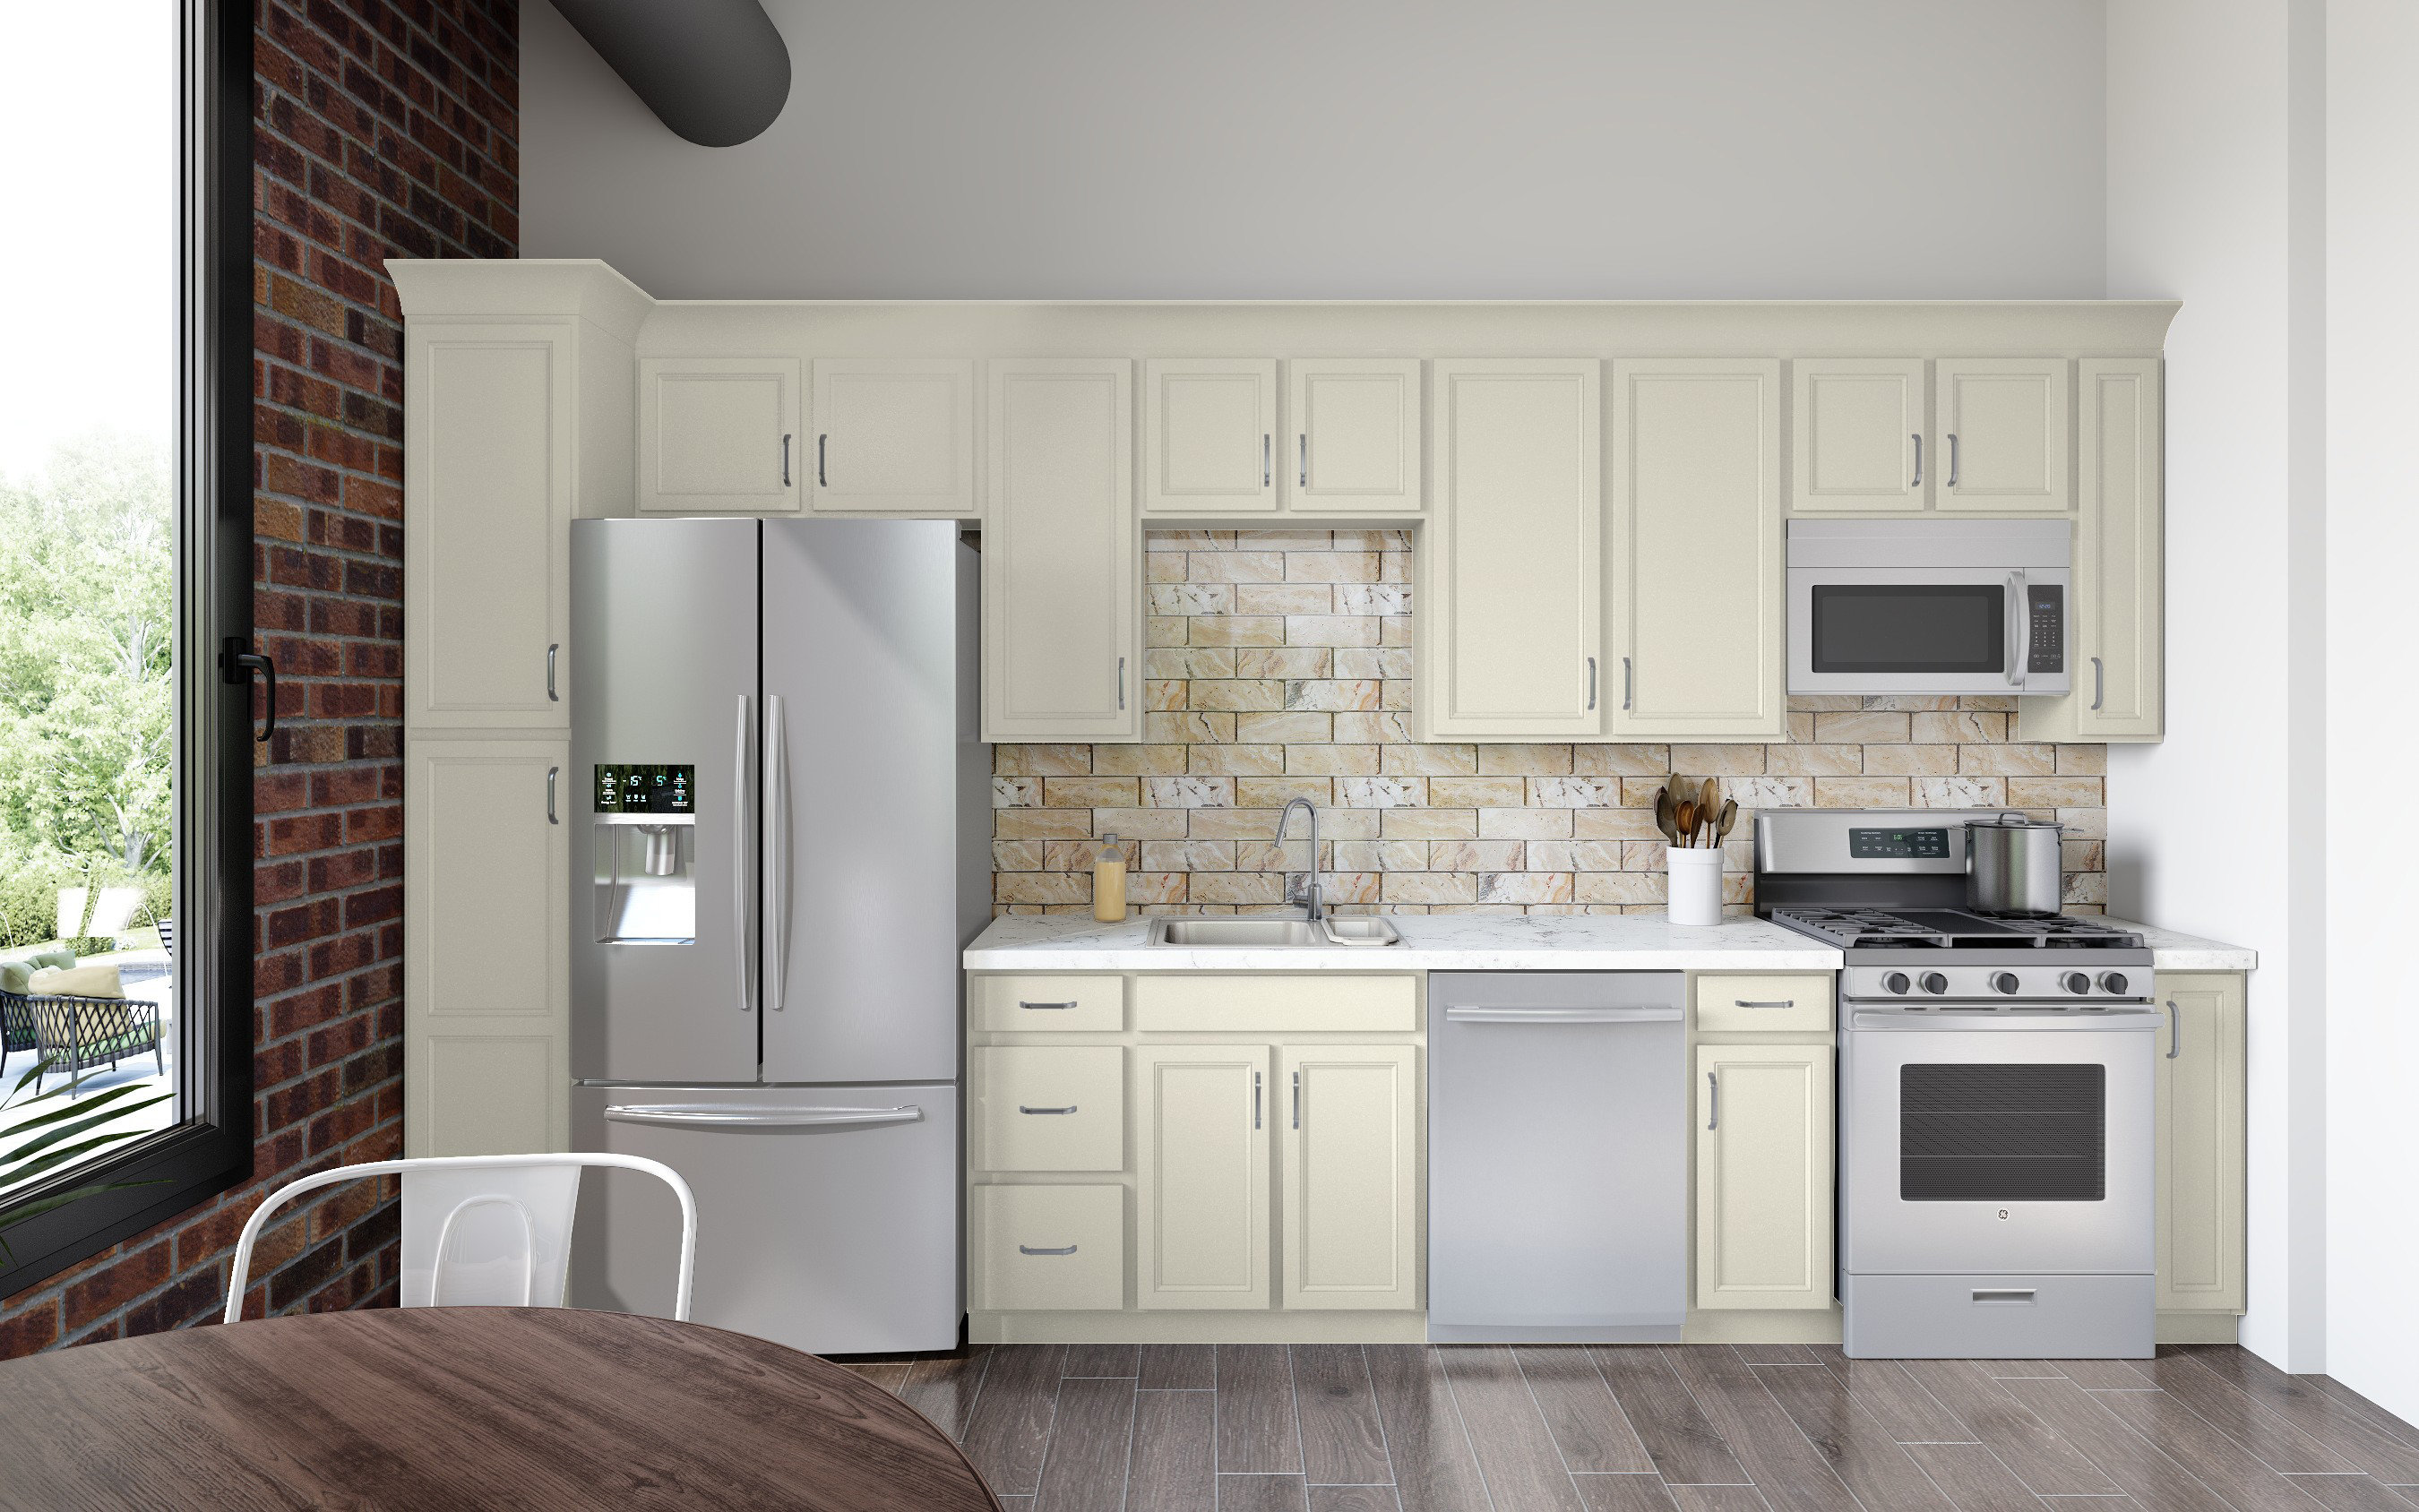 White Appliances Next to Cream Kitchen Cabinets - Soul & Lane